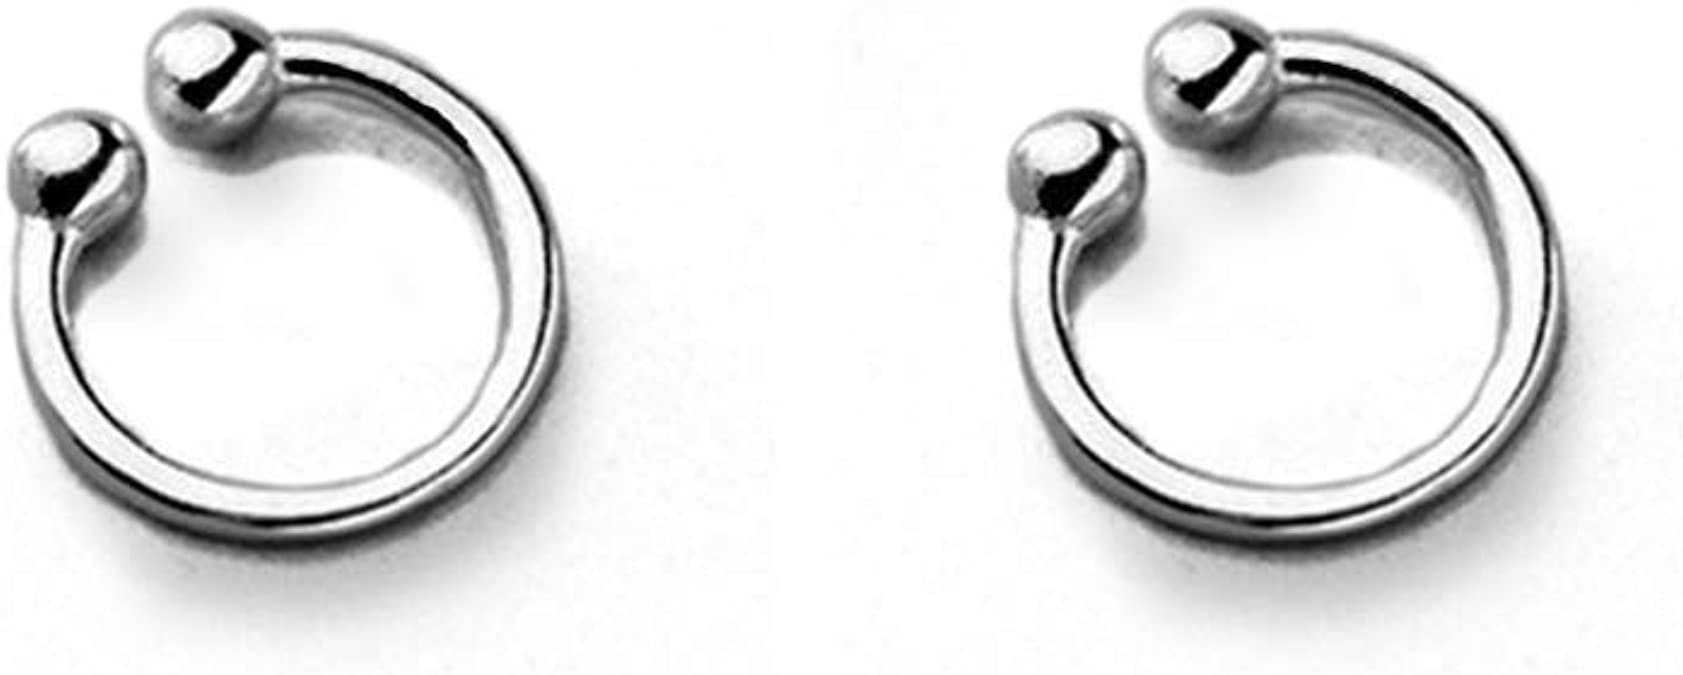 Minimalist Ear Cuff Wrap Clip On Earrings Sterling Silver for Non Pierced Ear Cartilage Simple Small Tiny Hoop Huggie Earring for Women Girls Hypoallergenic